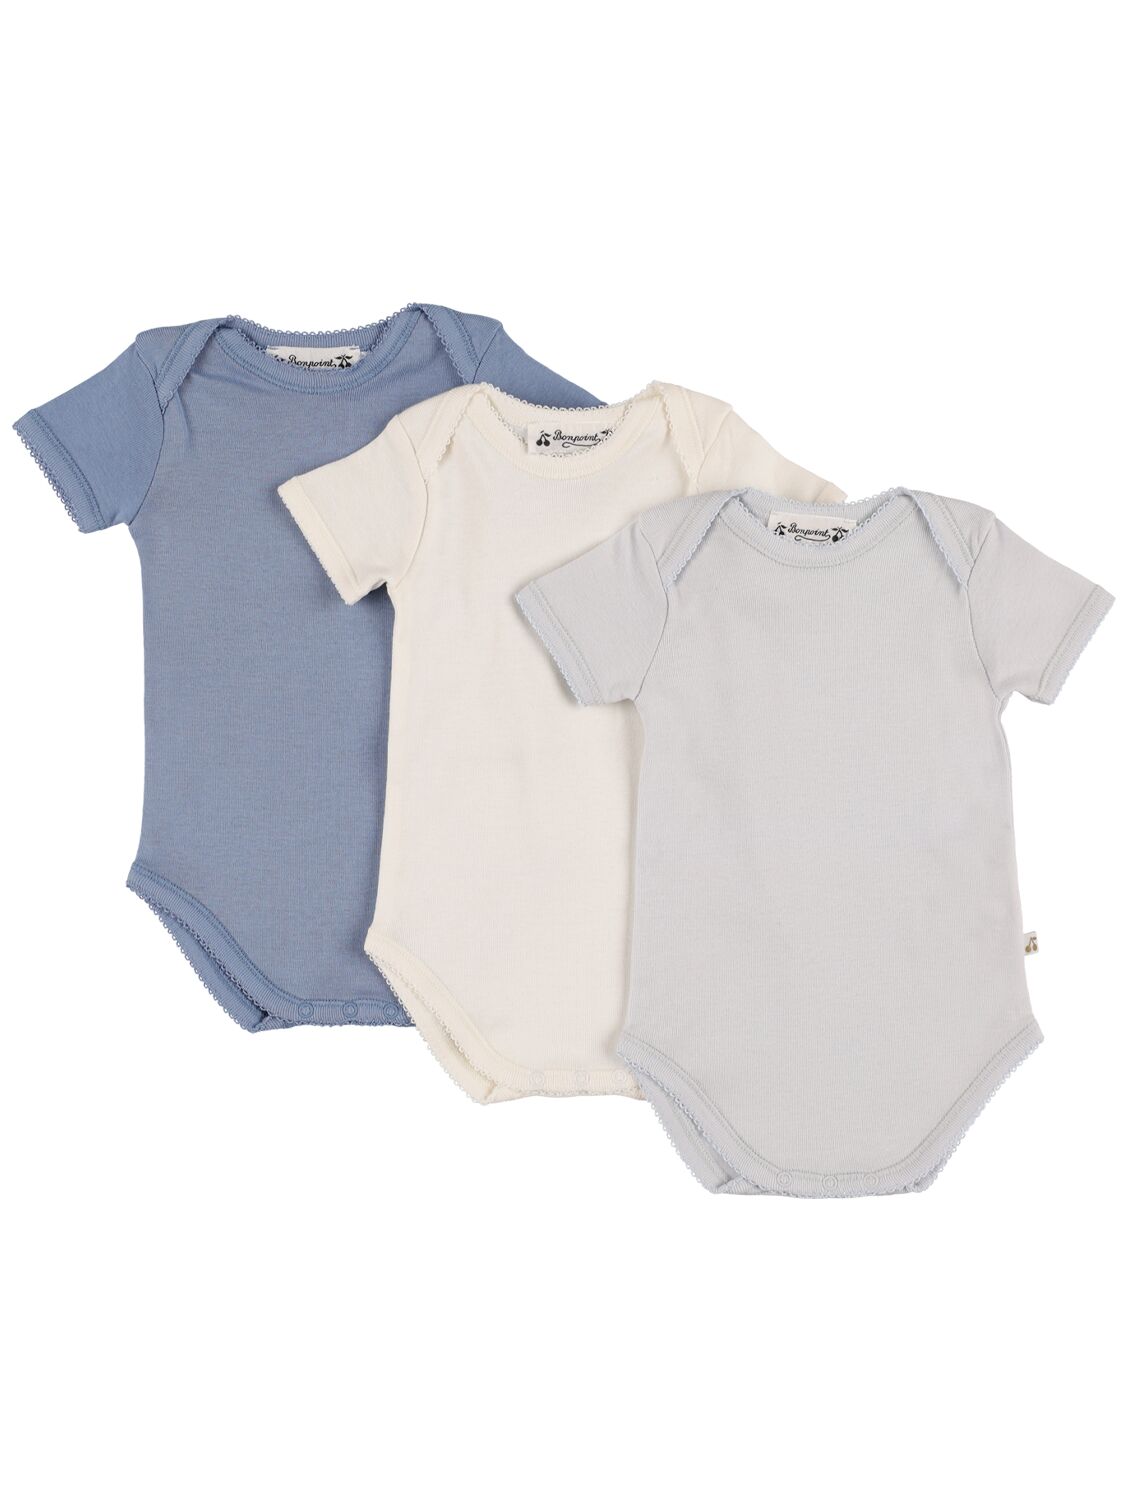 Bonpoint Babies' Set Of 3 Cotton Bodysuits In 스카이 블루